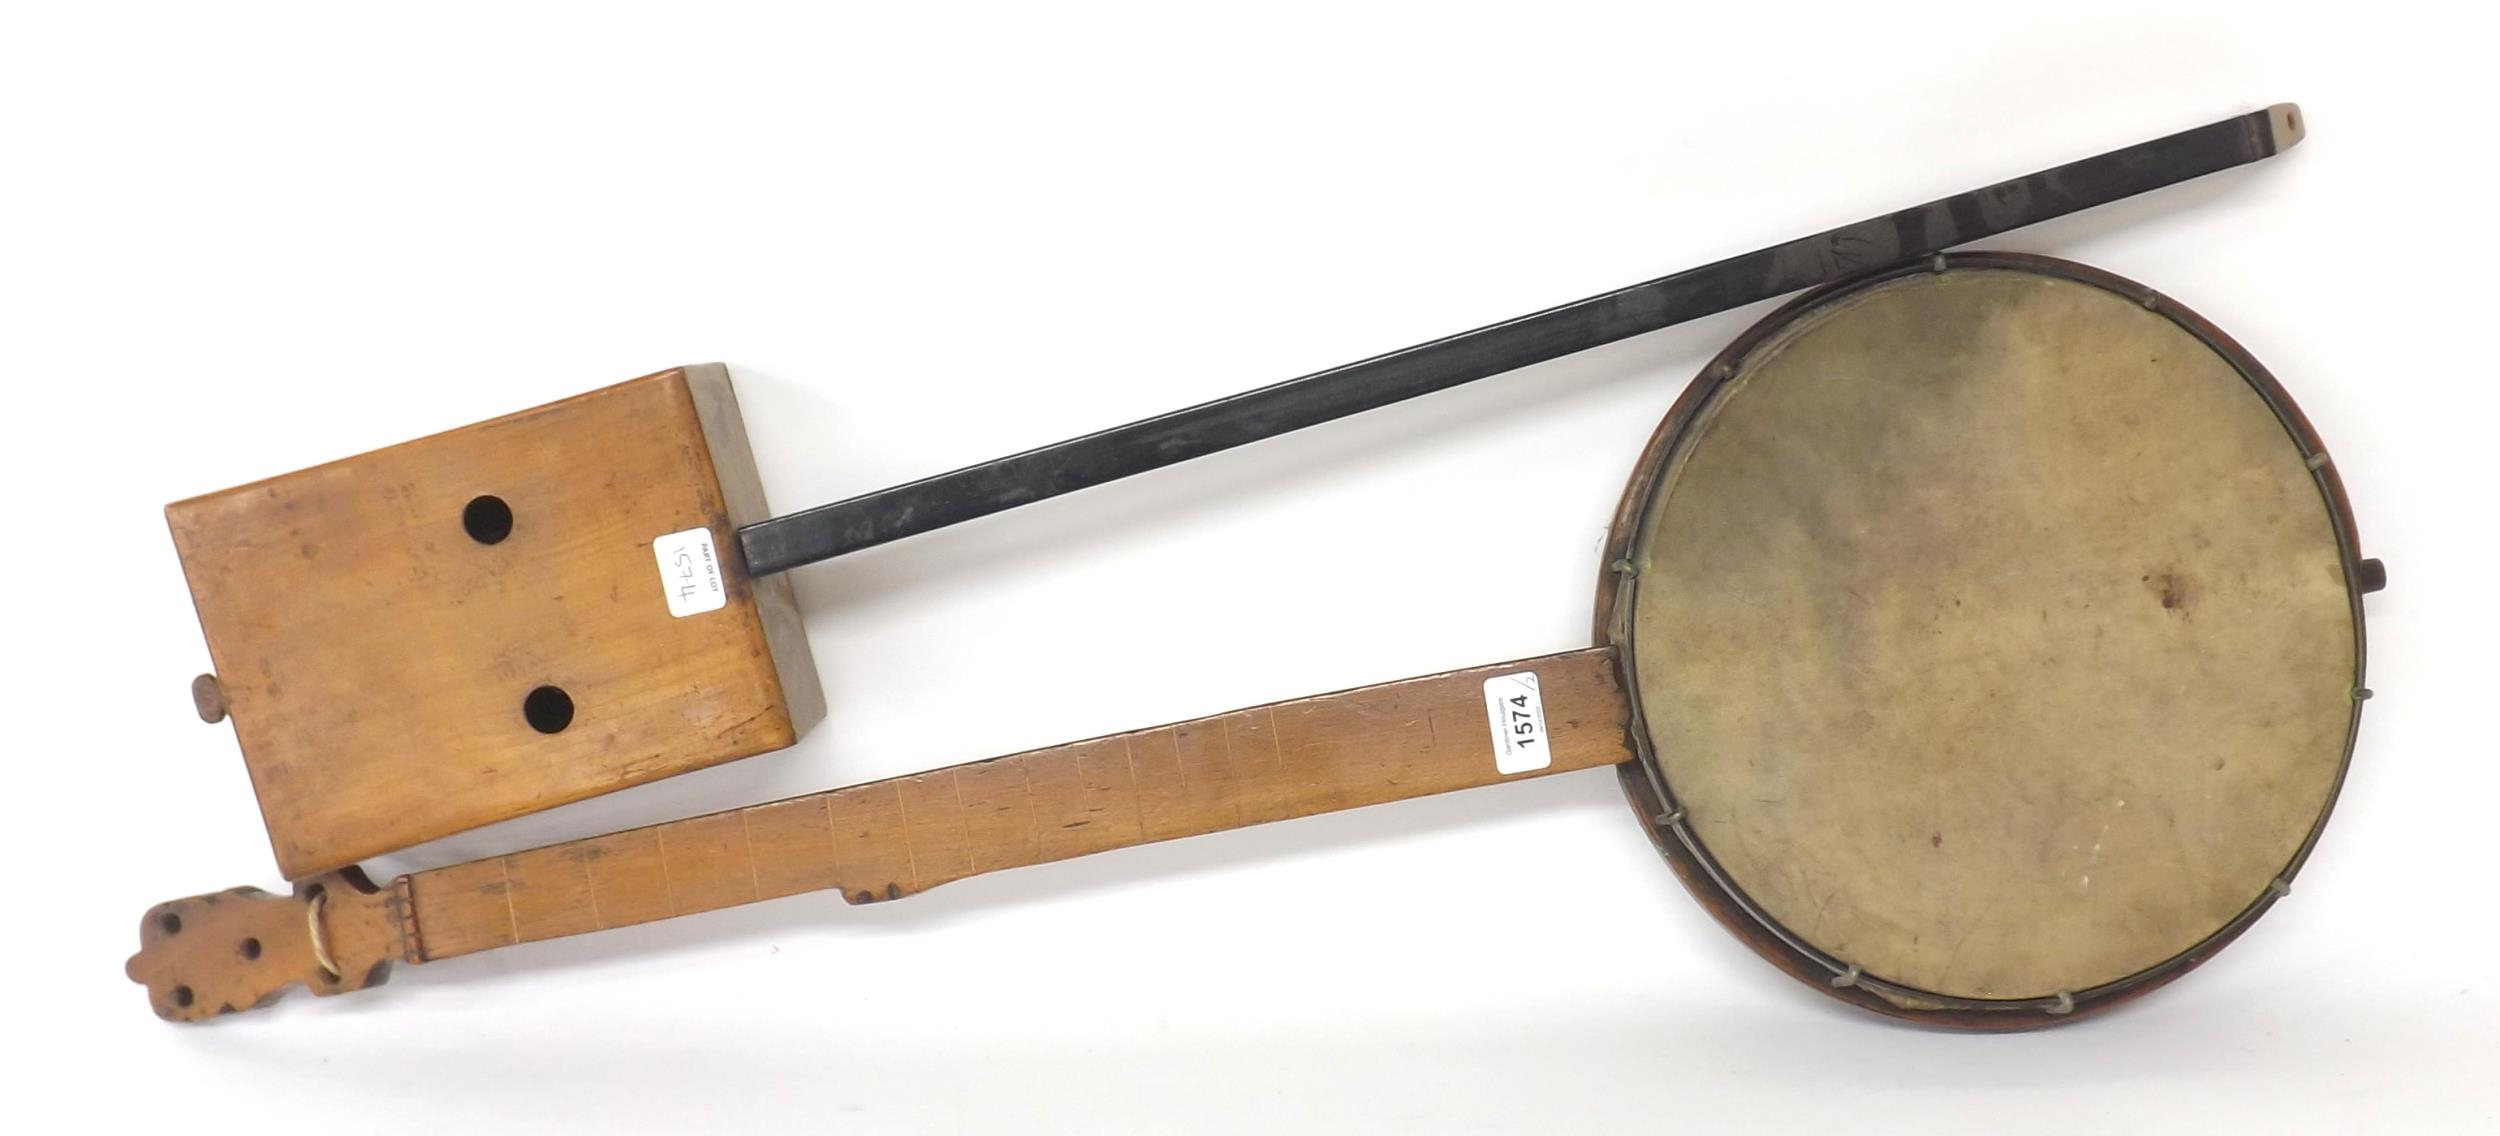 Antique five-string fretless banjo by and stamped John Alvey Turner, 33 Bishopsgate St, London, with